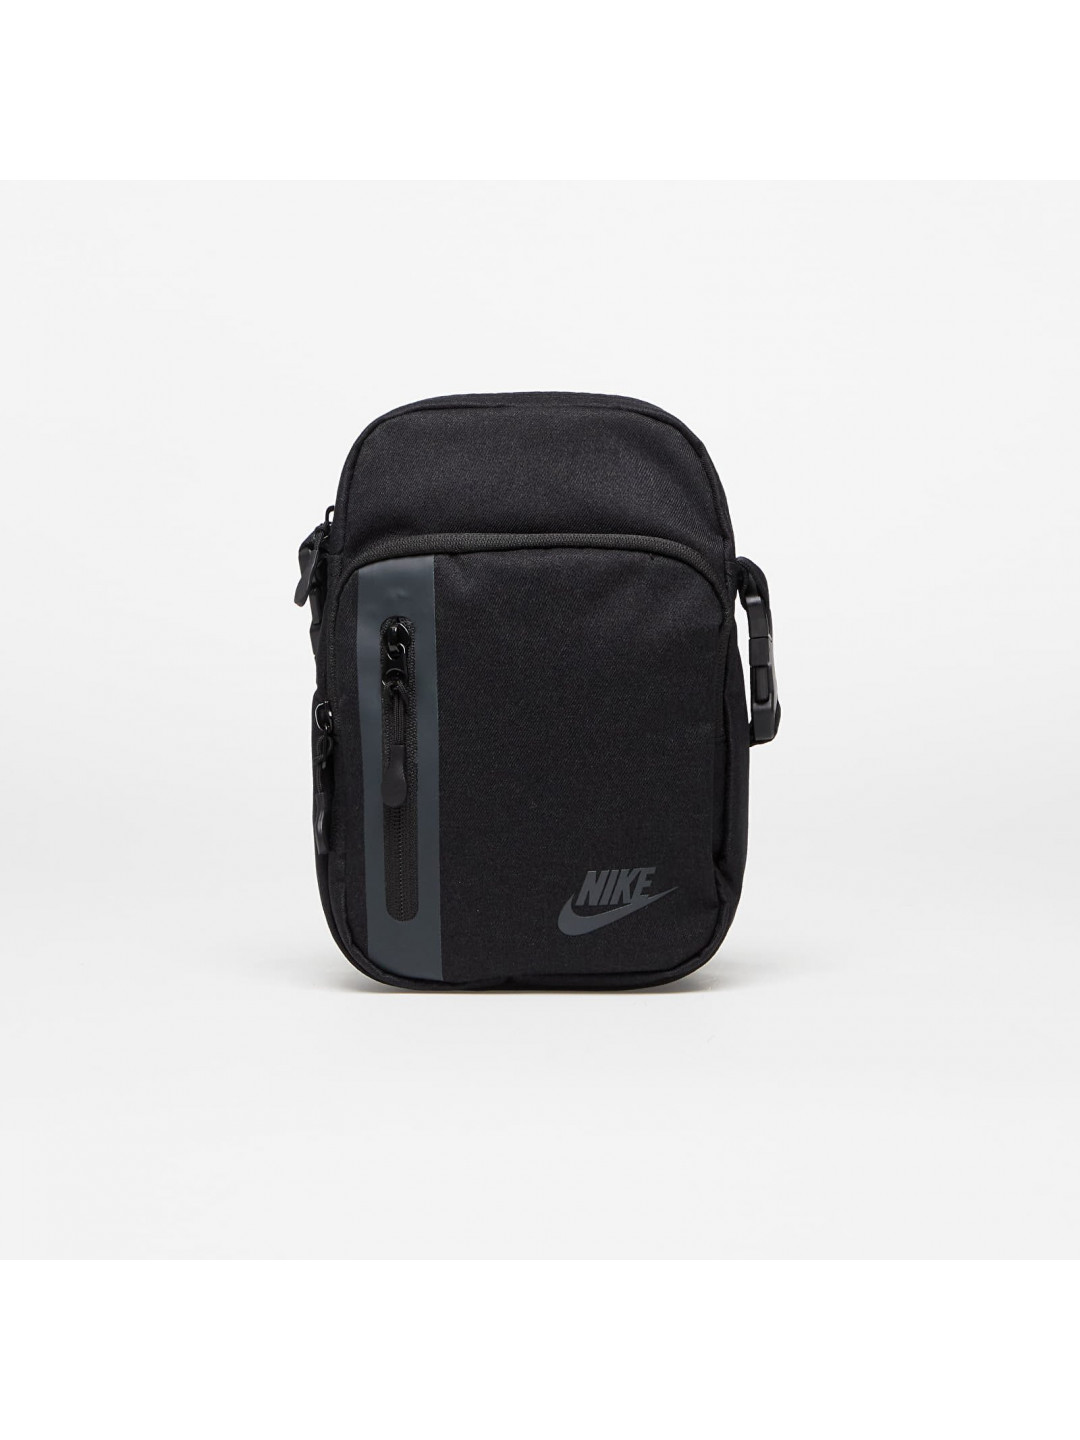 Nike Elemental Premium Crossbody Bag Black Black Anthracite